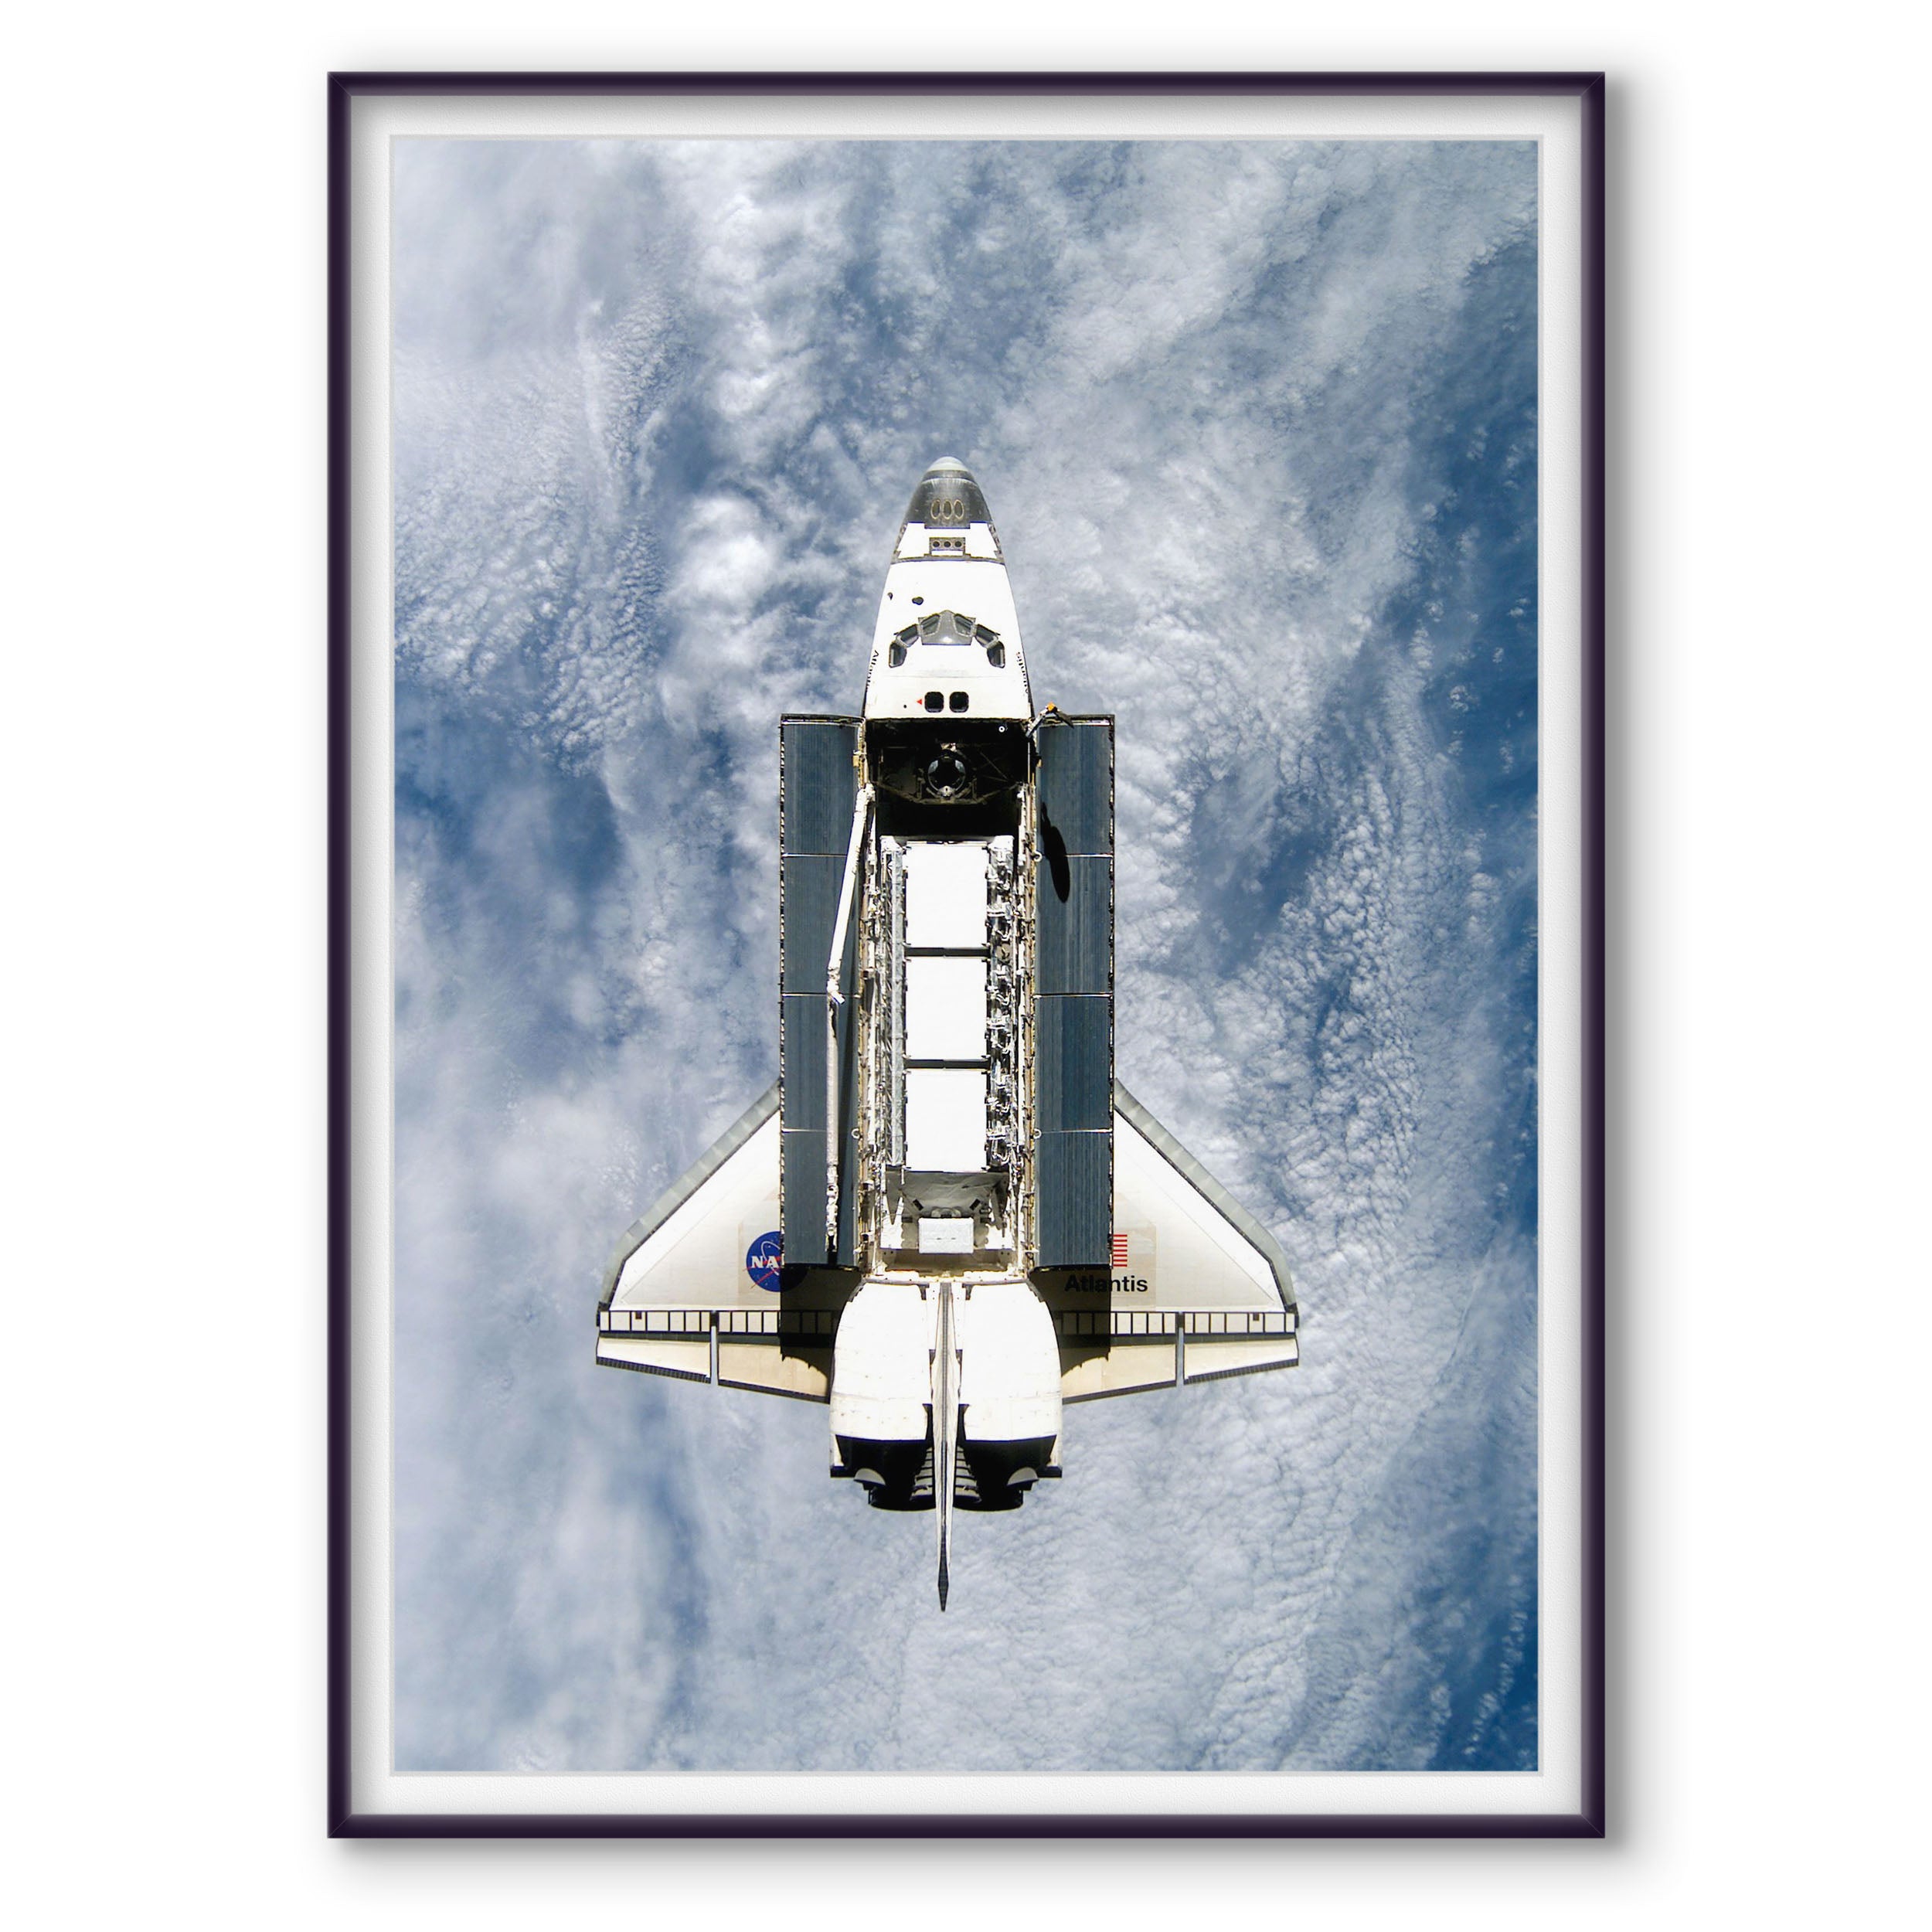 Space Shuttle Atlantis on the orbit